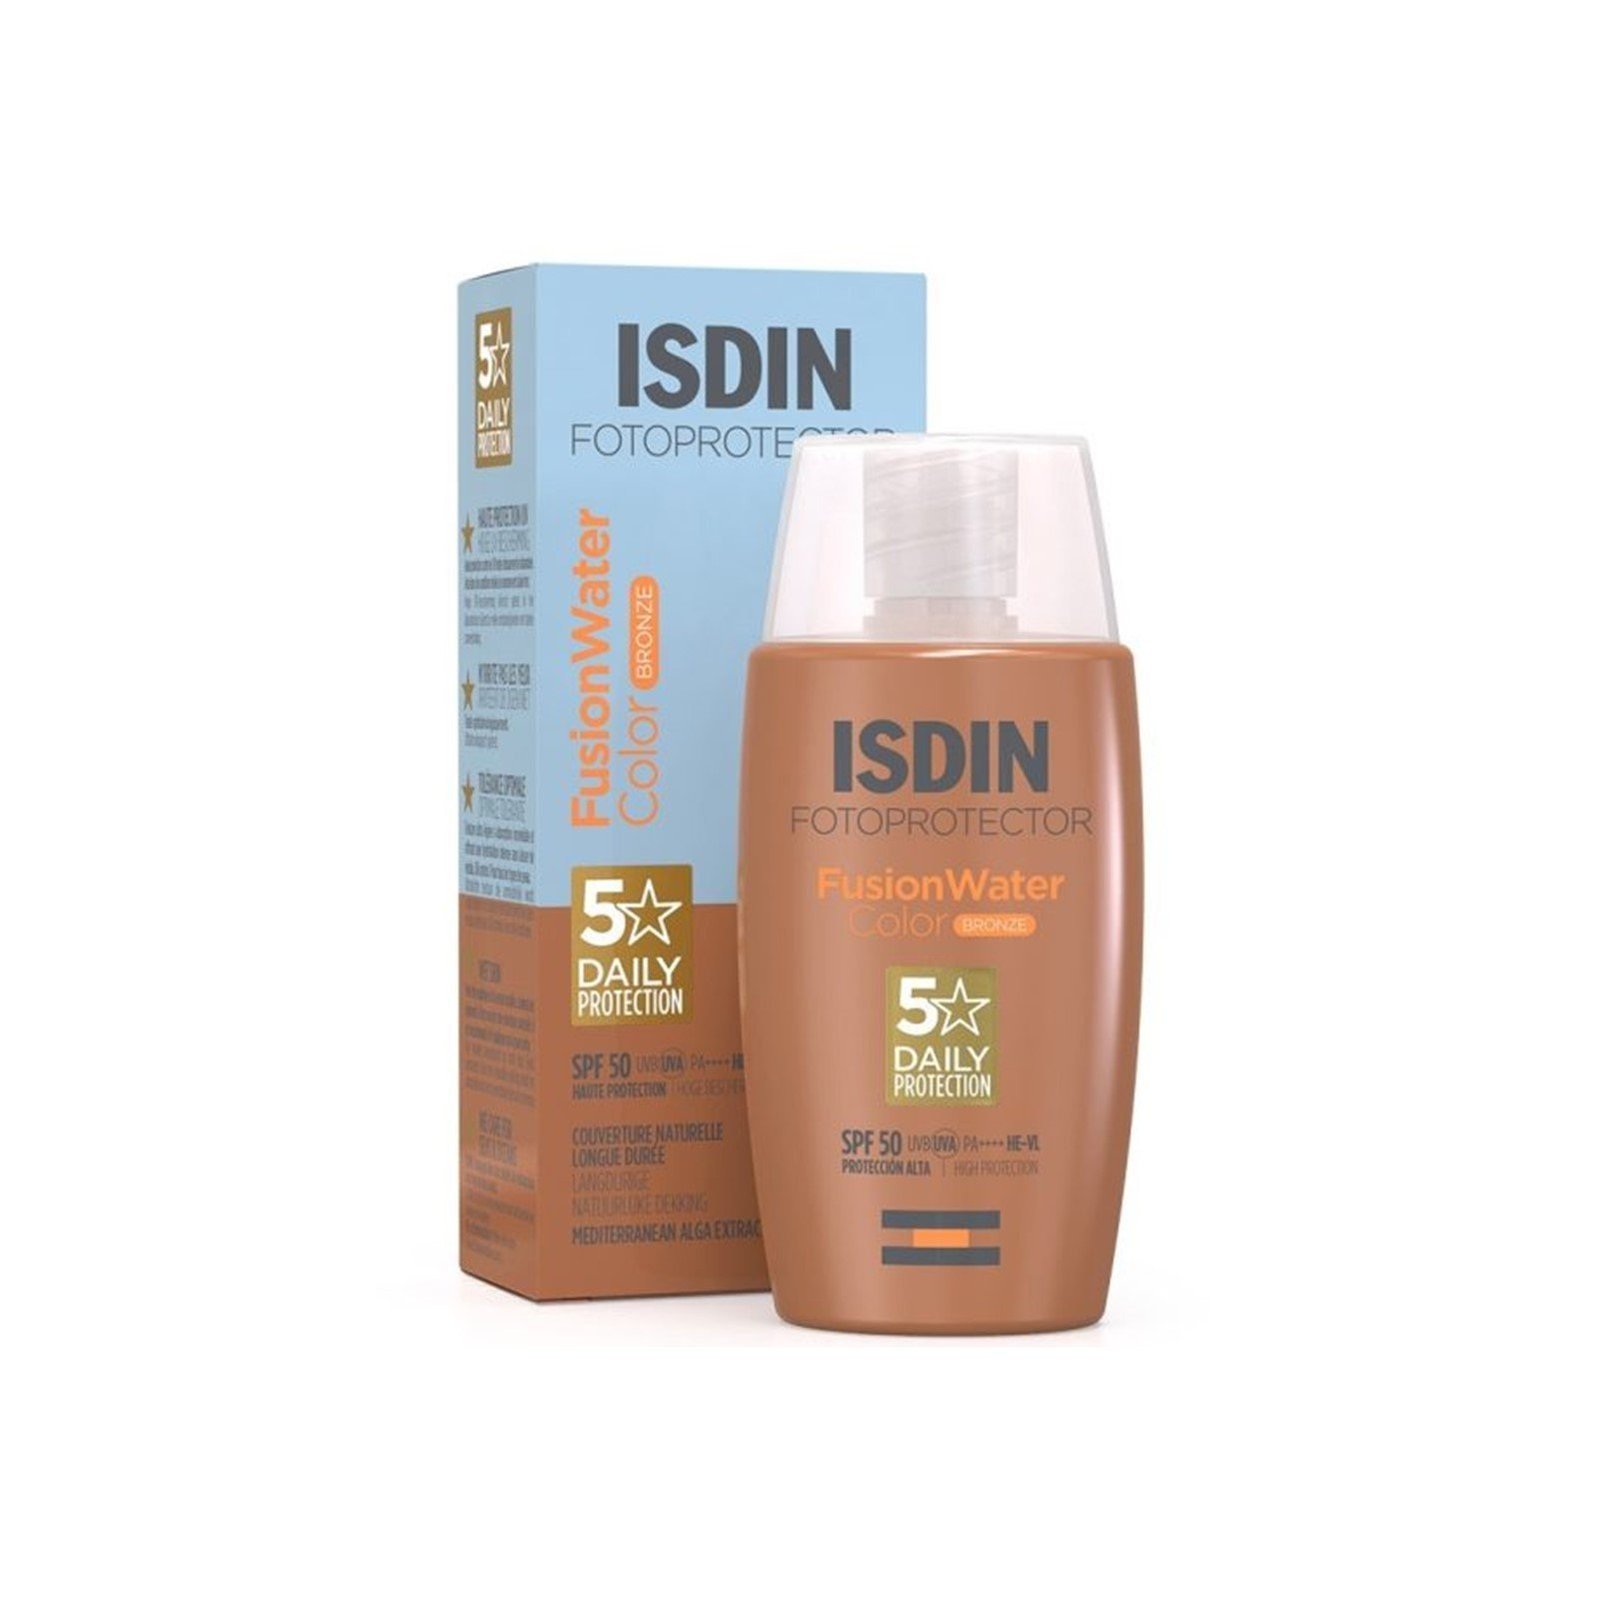 ISDIN Fotoprotector Fusion Water Color Bronze SPF50 50ml (1.69floz)